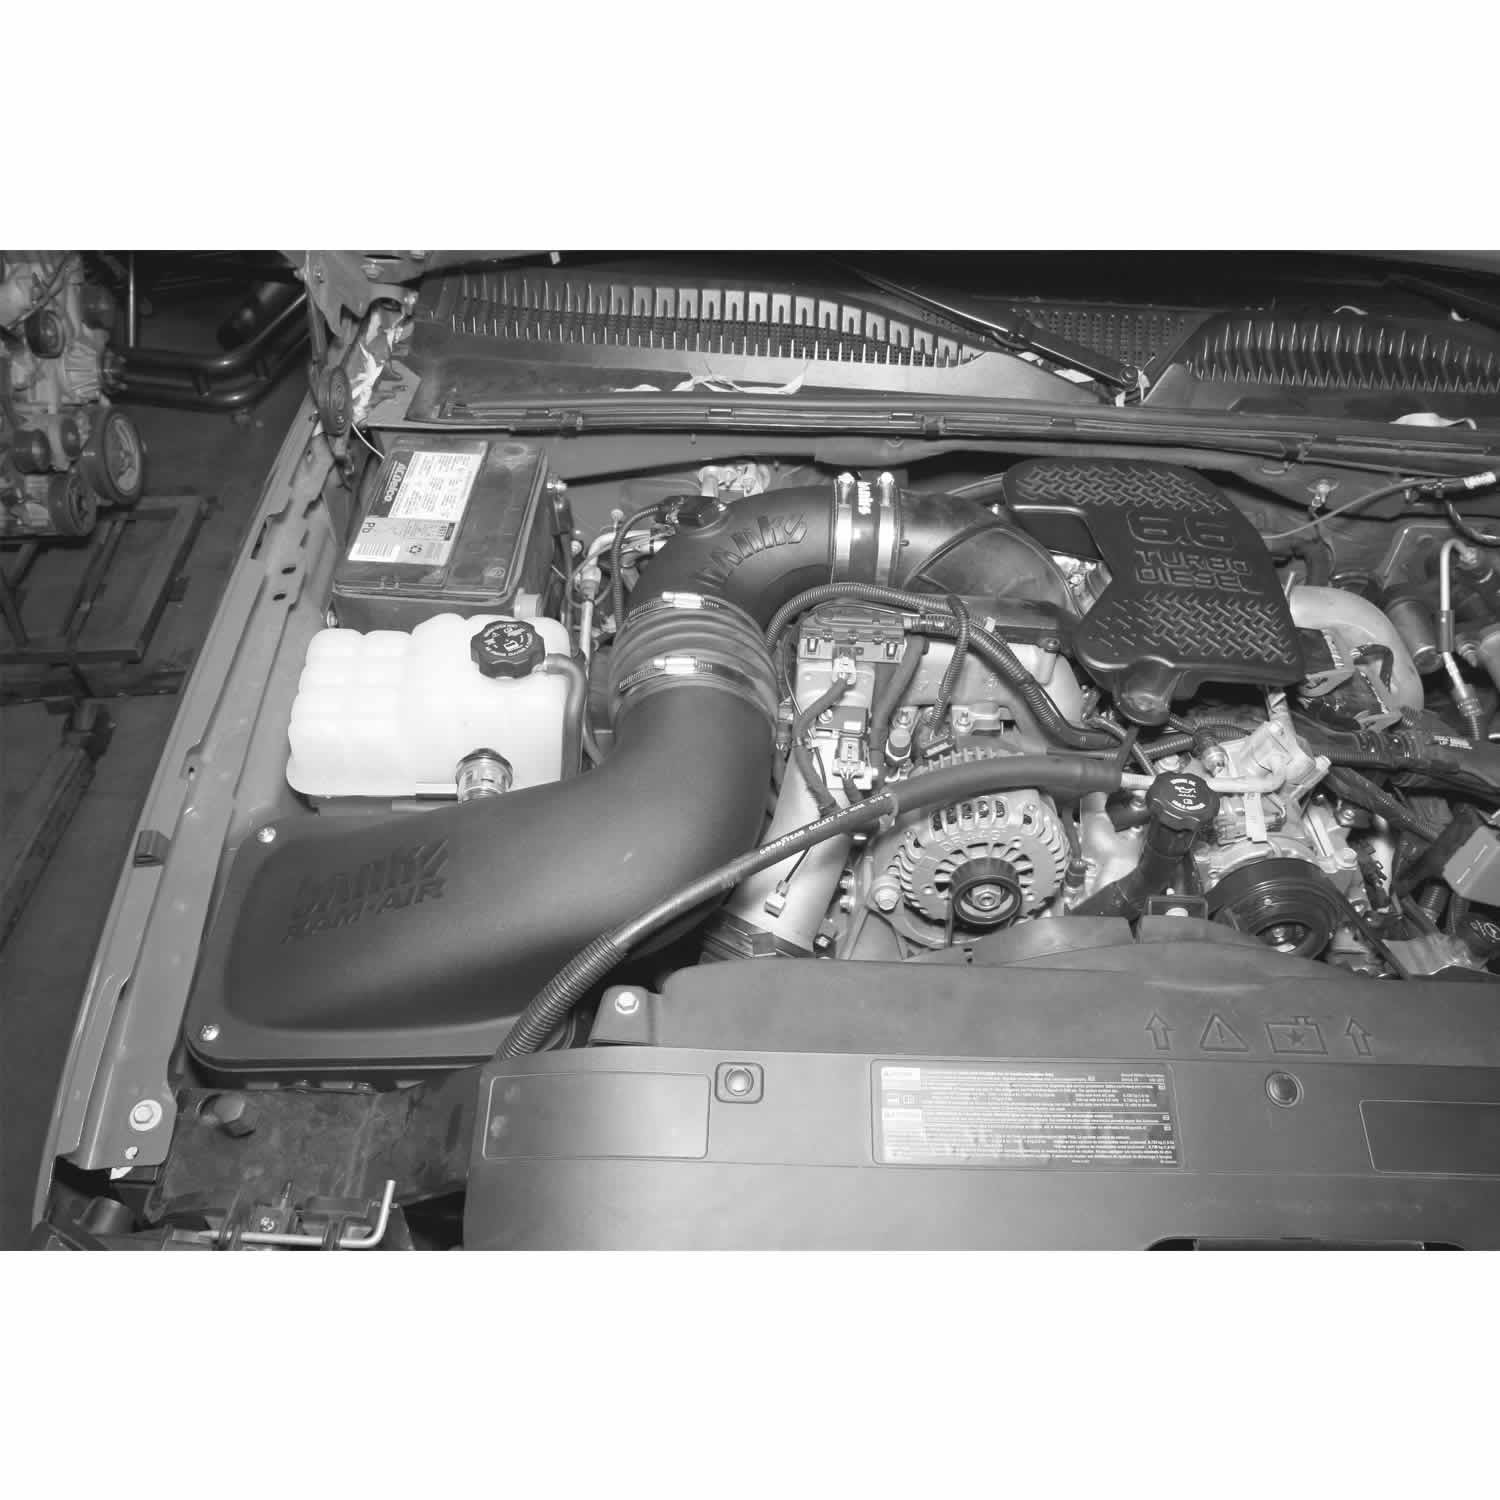 Engine Cold Air Intake Performance Kit